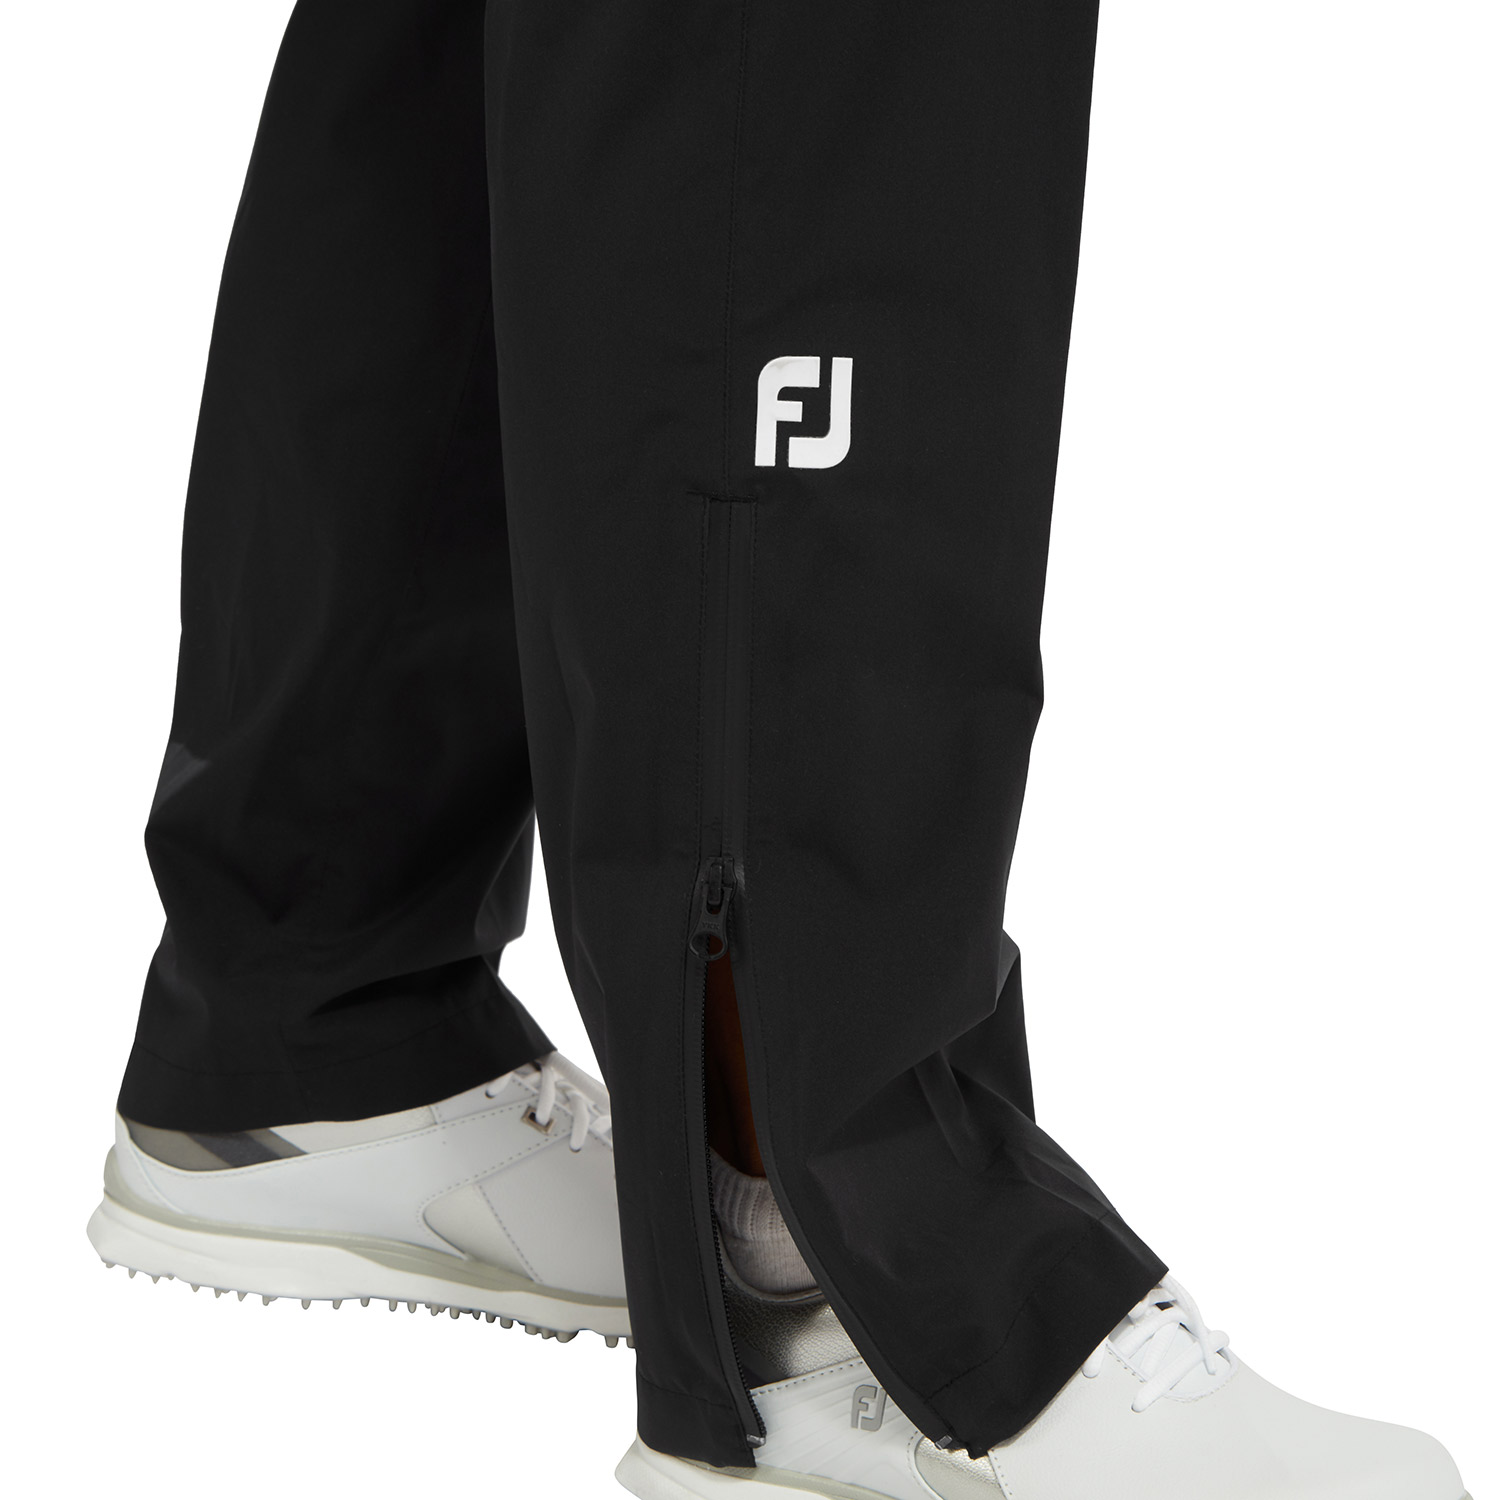 FootJoy Women's Waterproof Rain Trousers Review | Equipment Reviews